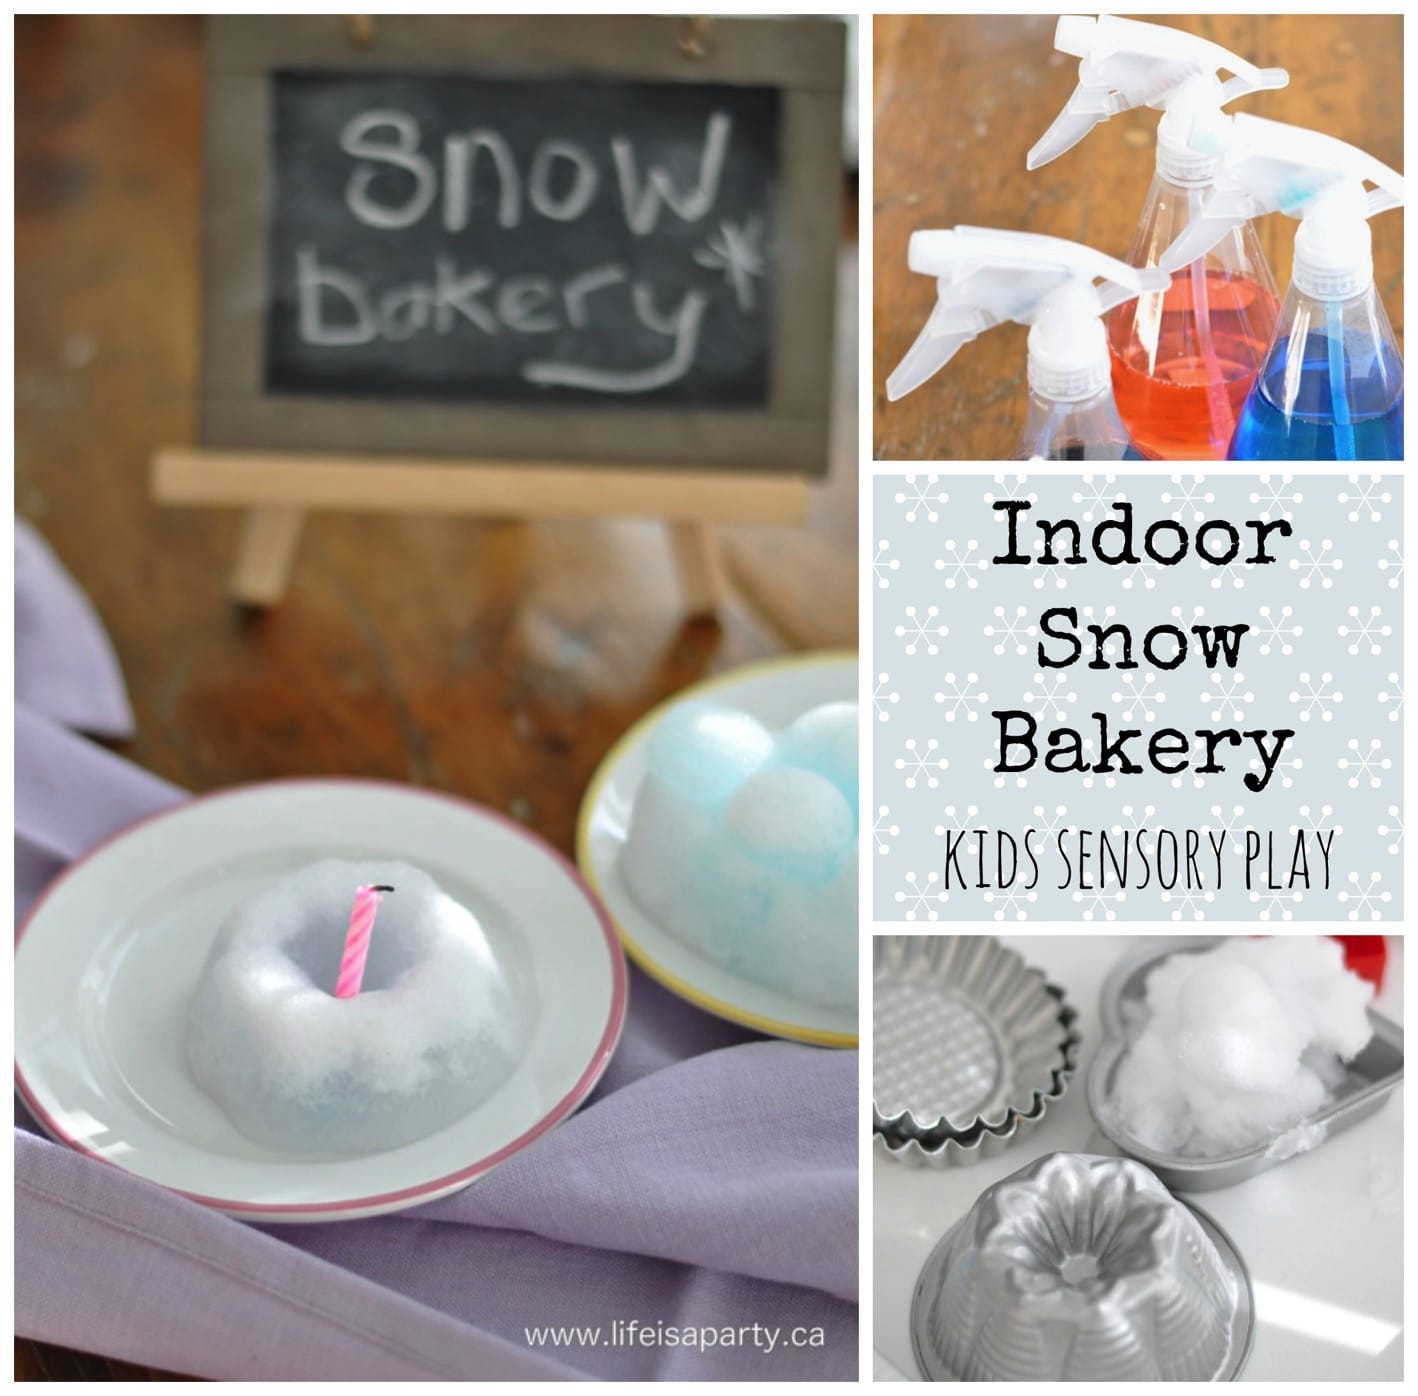 Snow Bakery Sensory Play Ideas